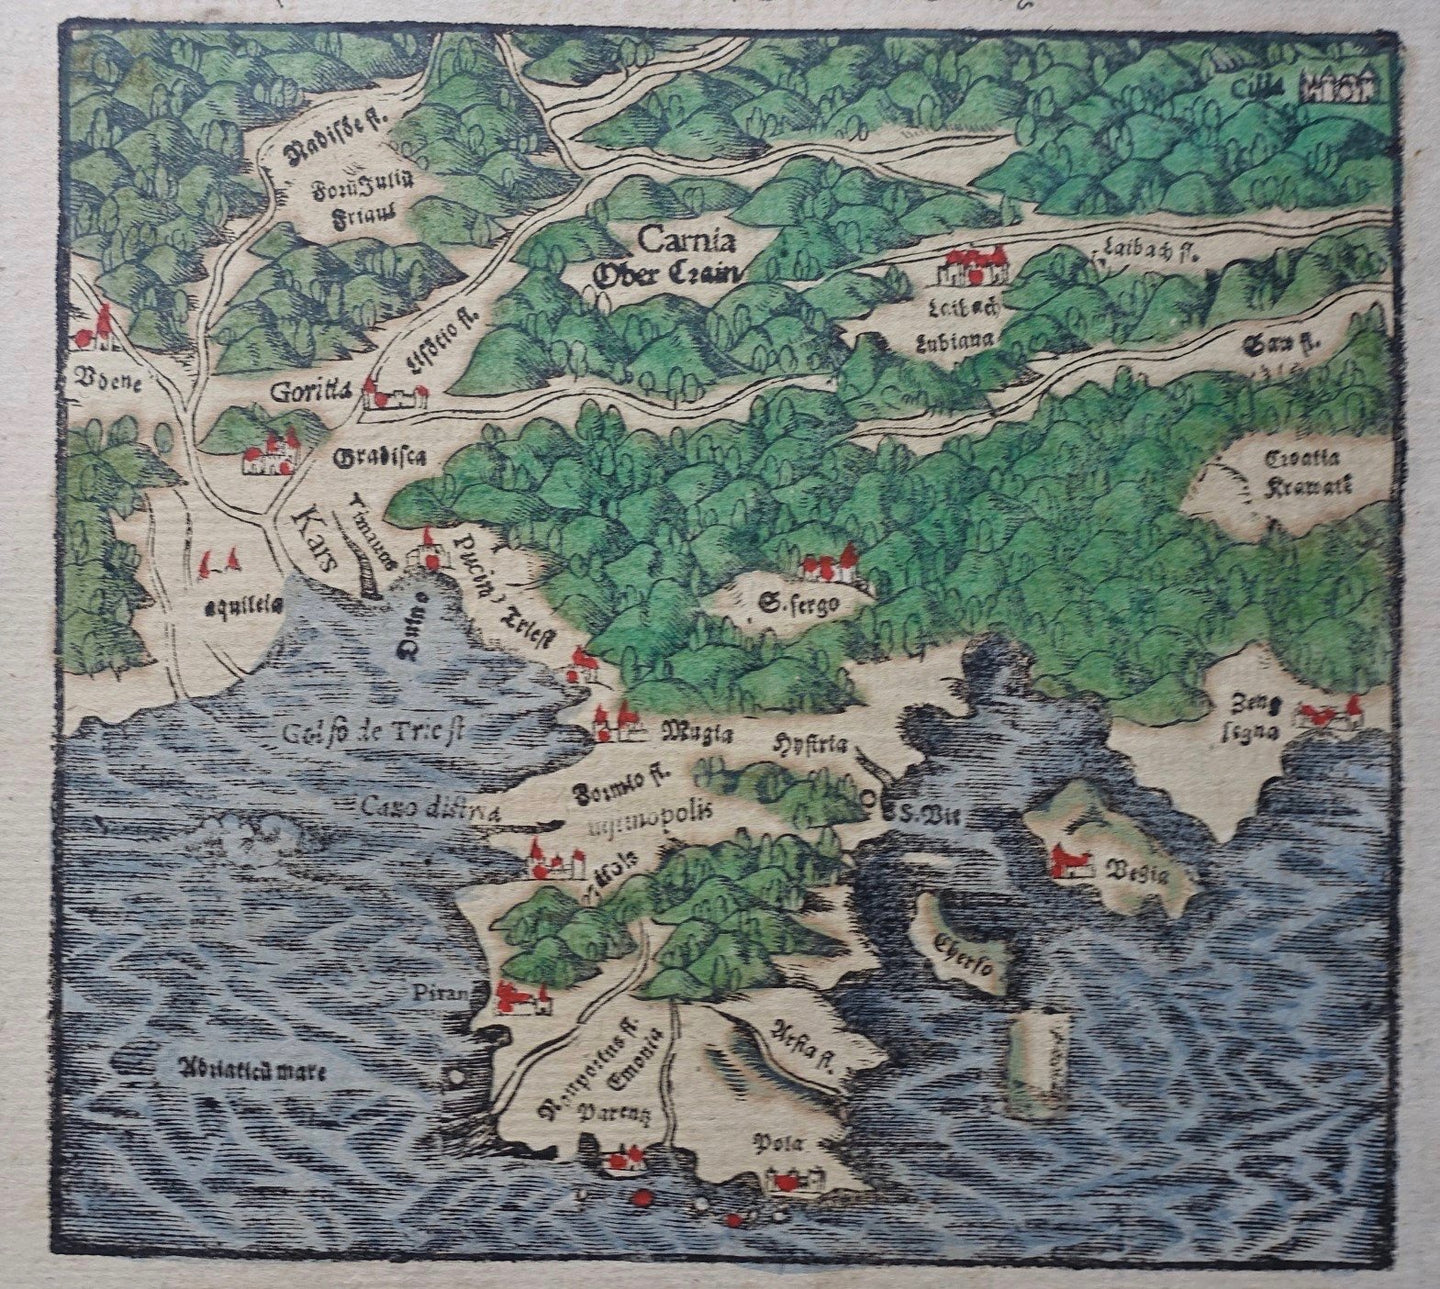 Slovenië Kroatië Istrië Slovenia Croatia Istria - S Münster - ca 1578